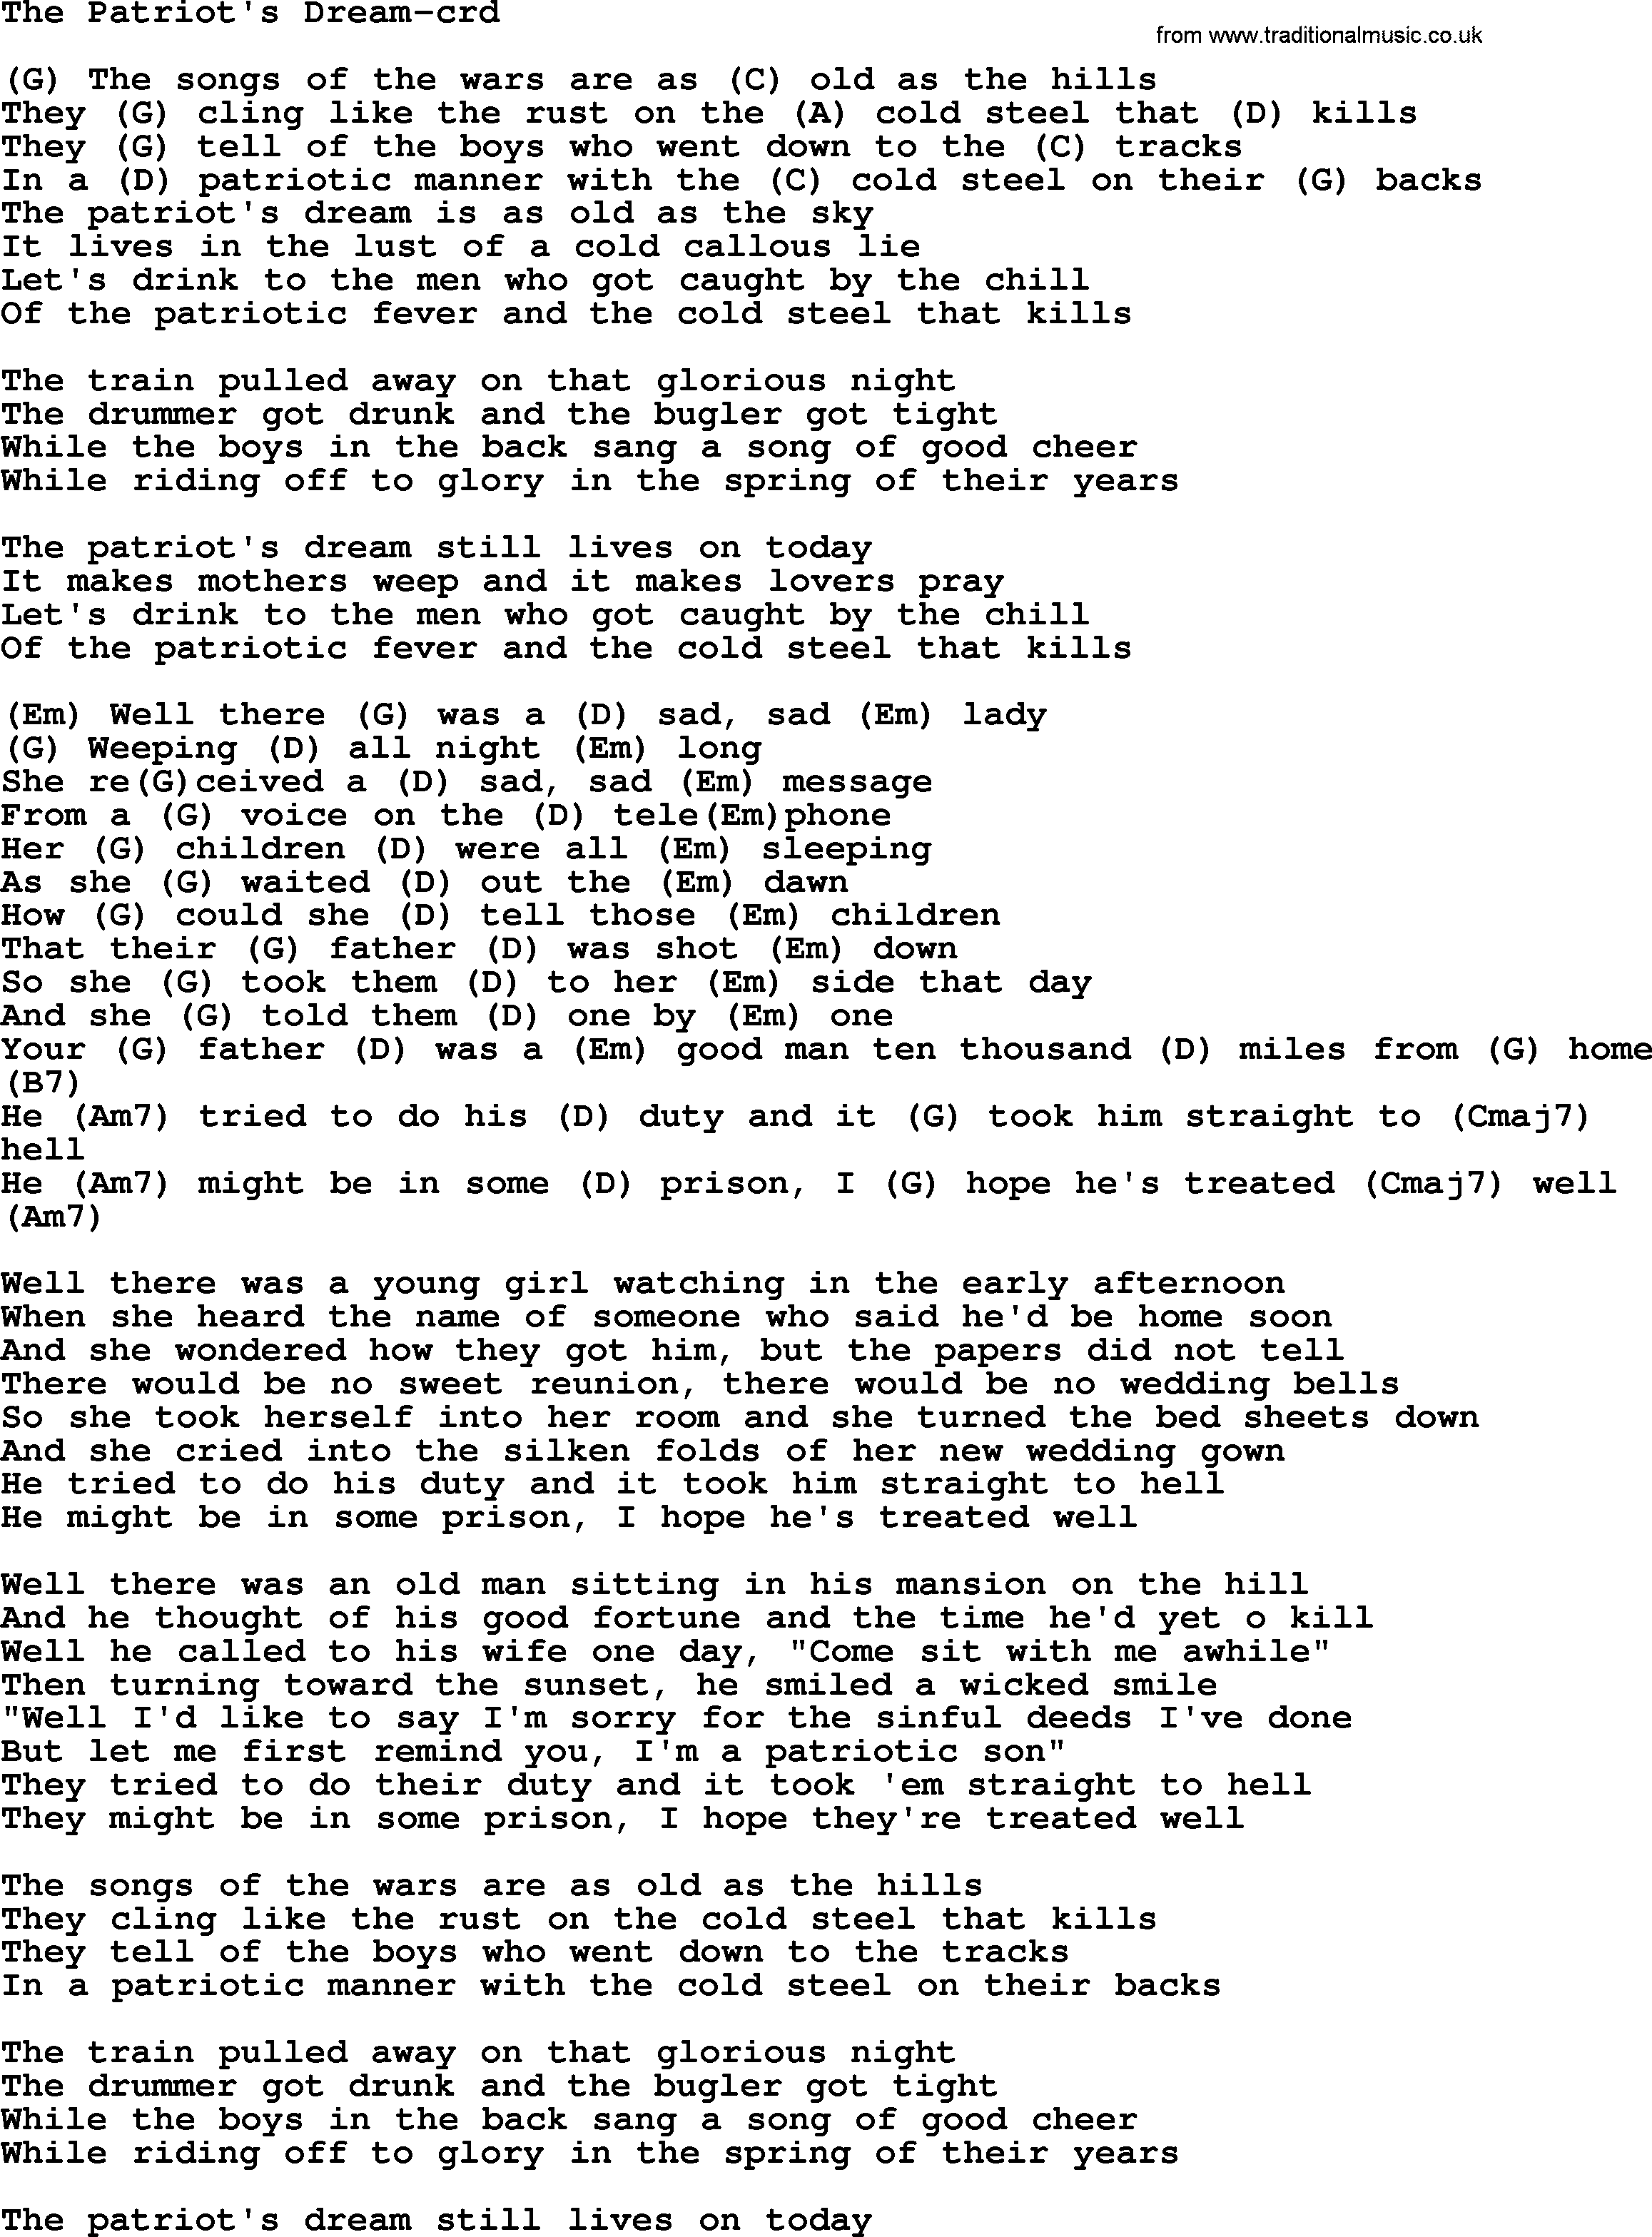 Gordon Lightfoot song The Patriot's Dream, lyrics and chords